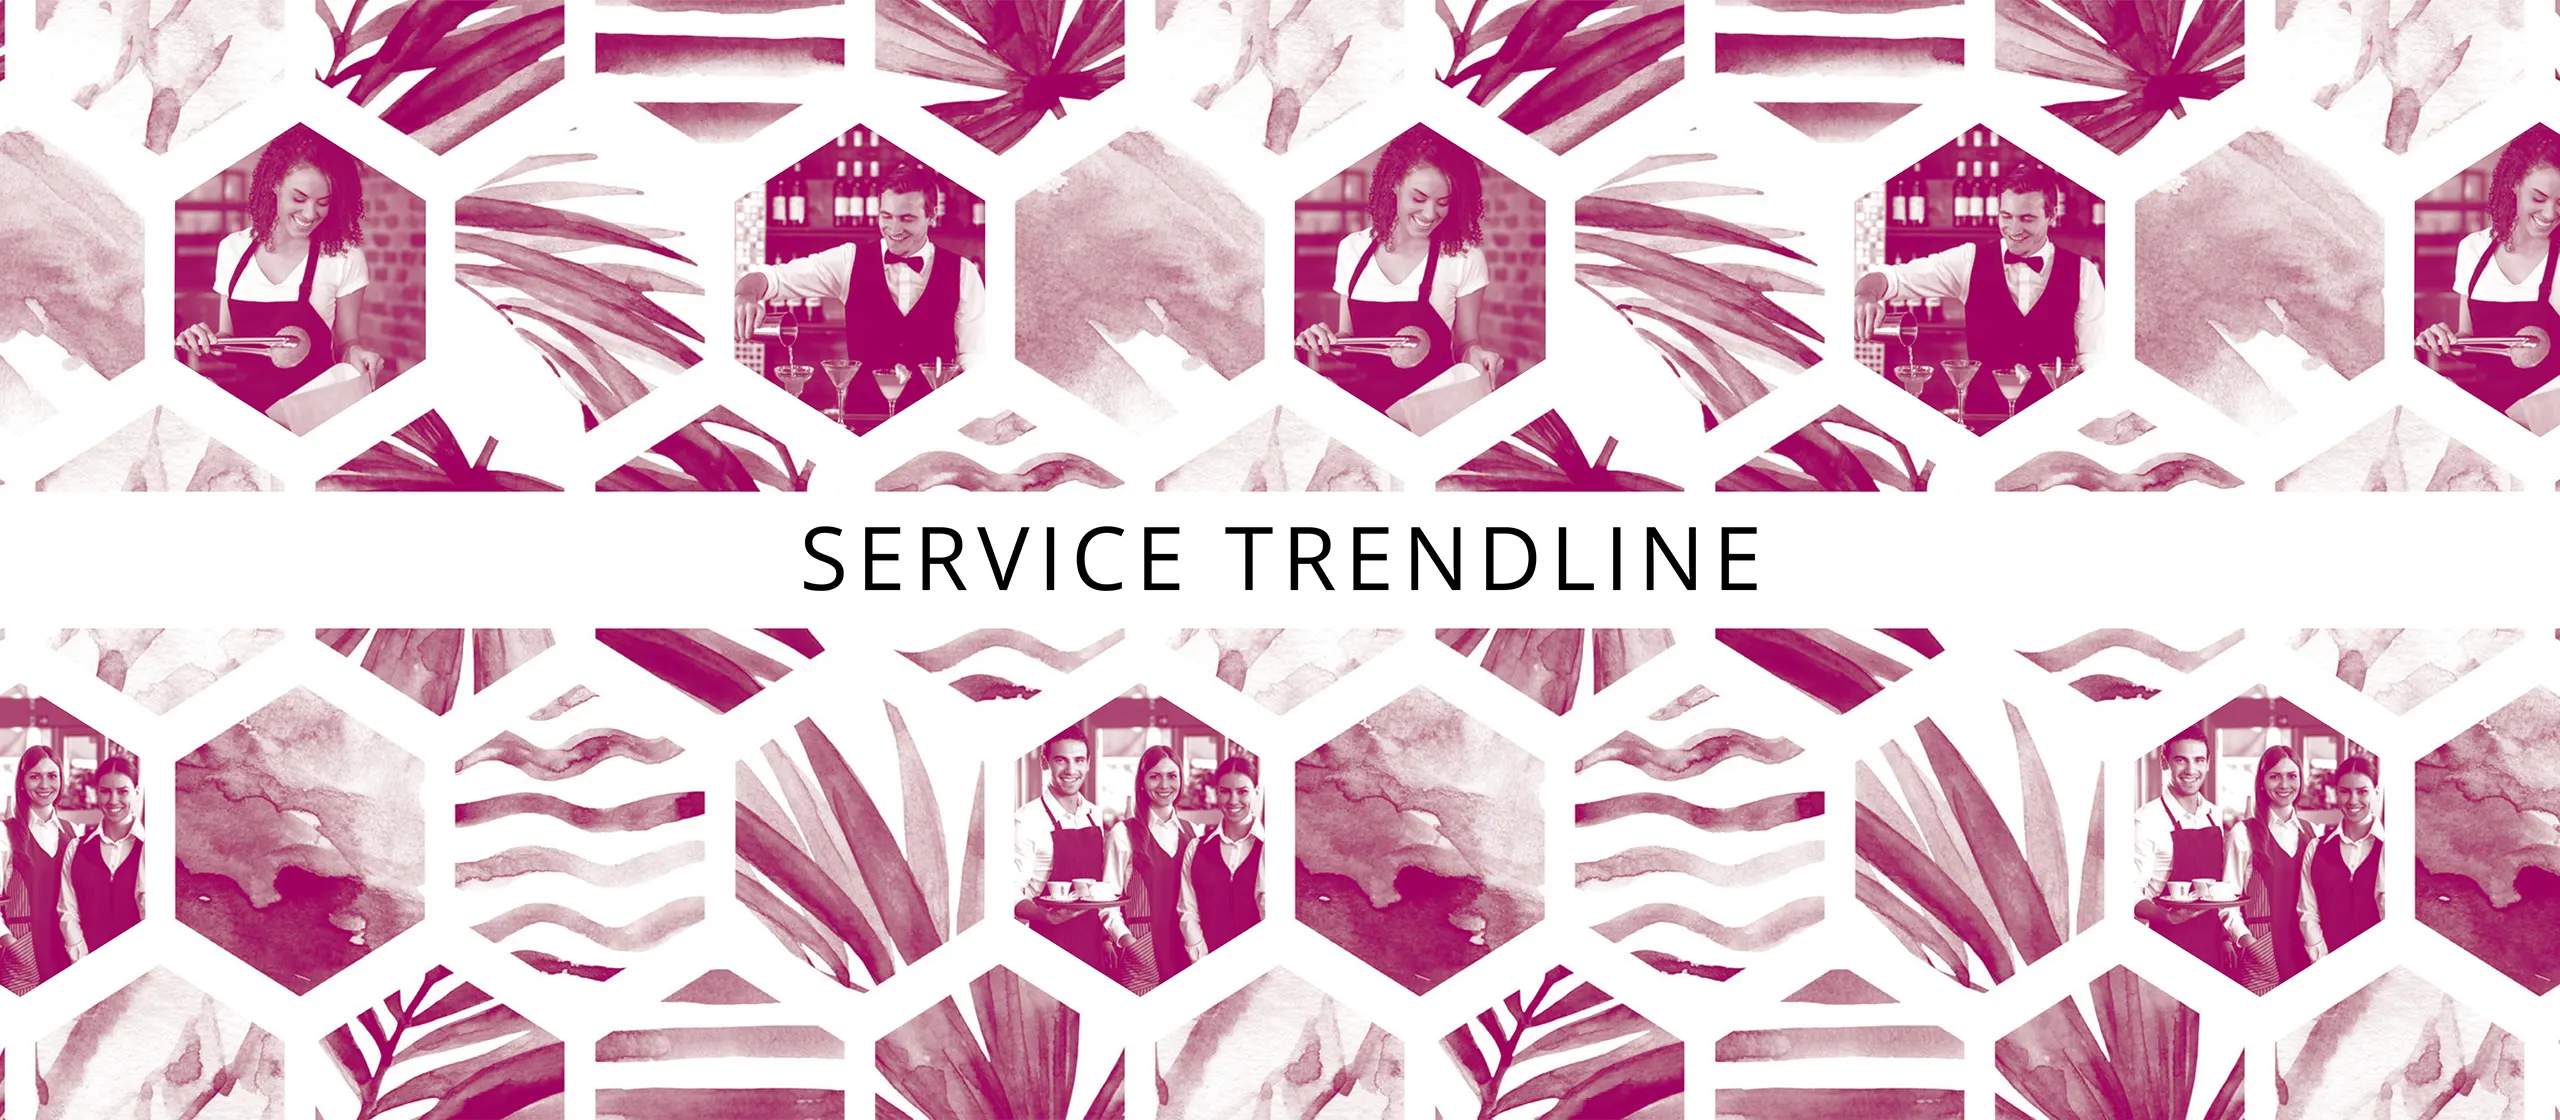 Service Trendline